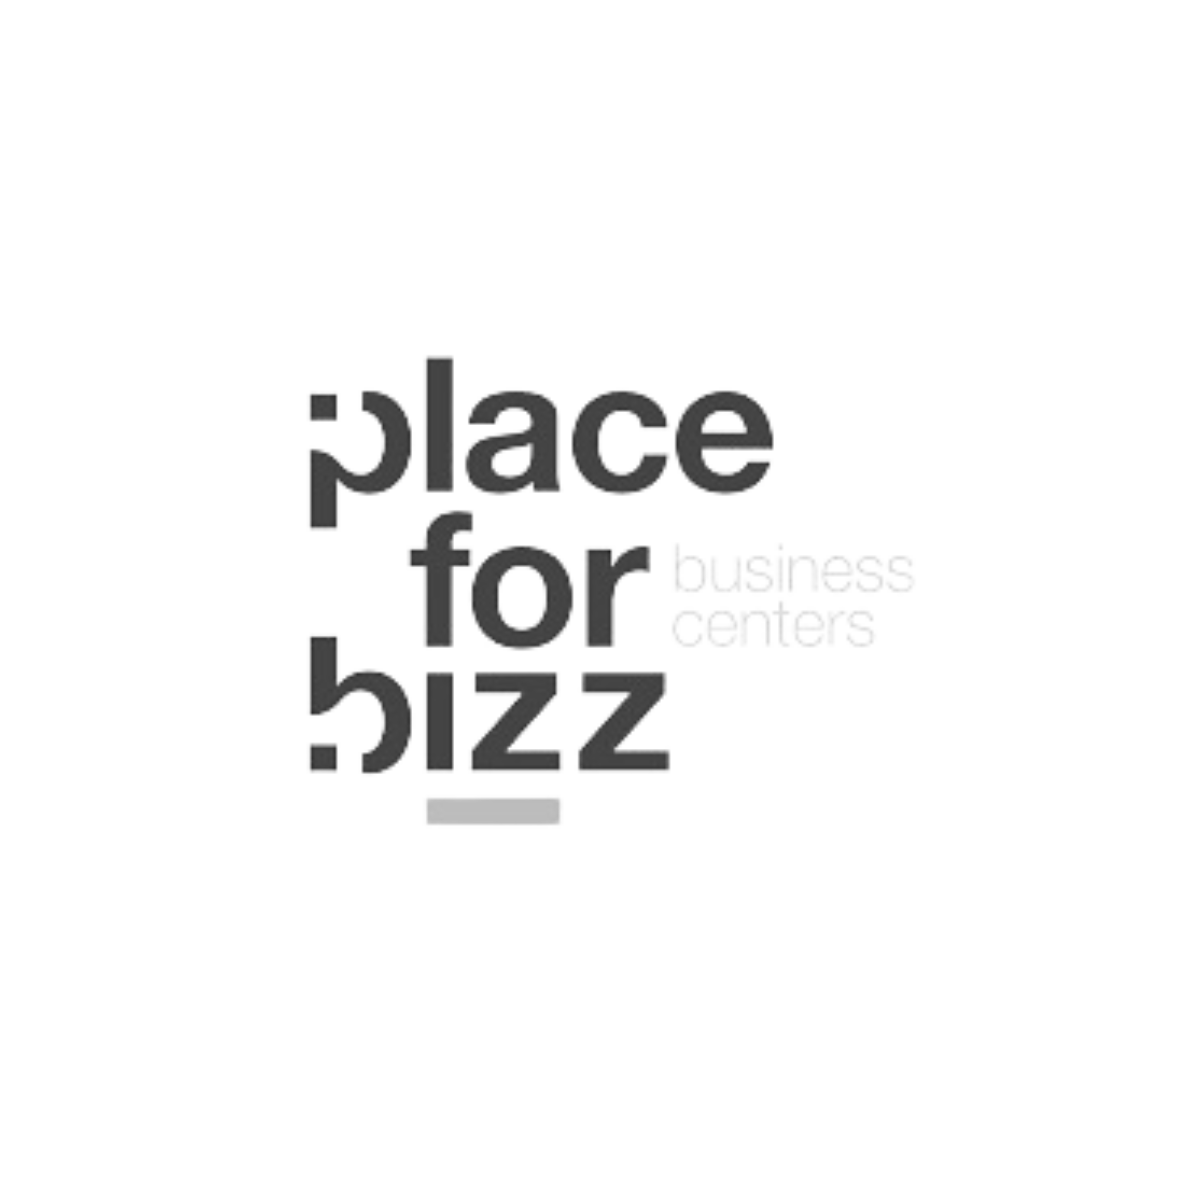 co-working logo - place fot bizz